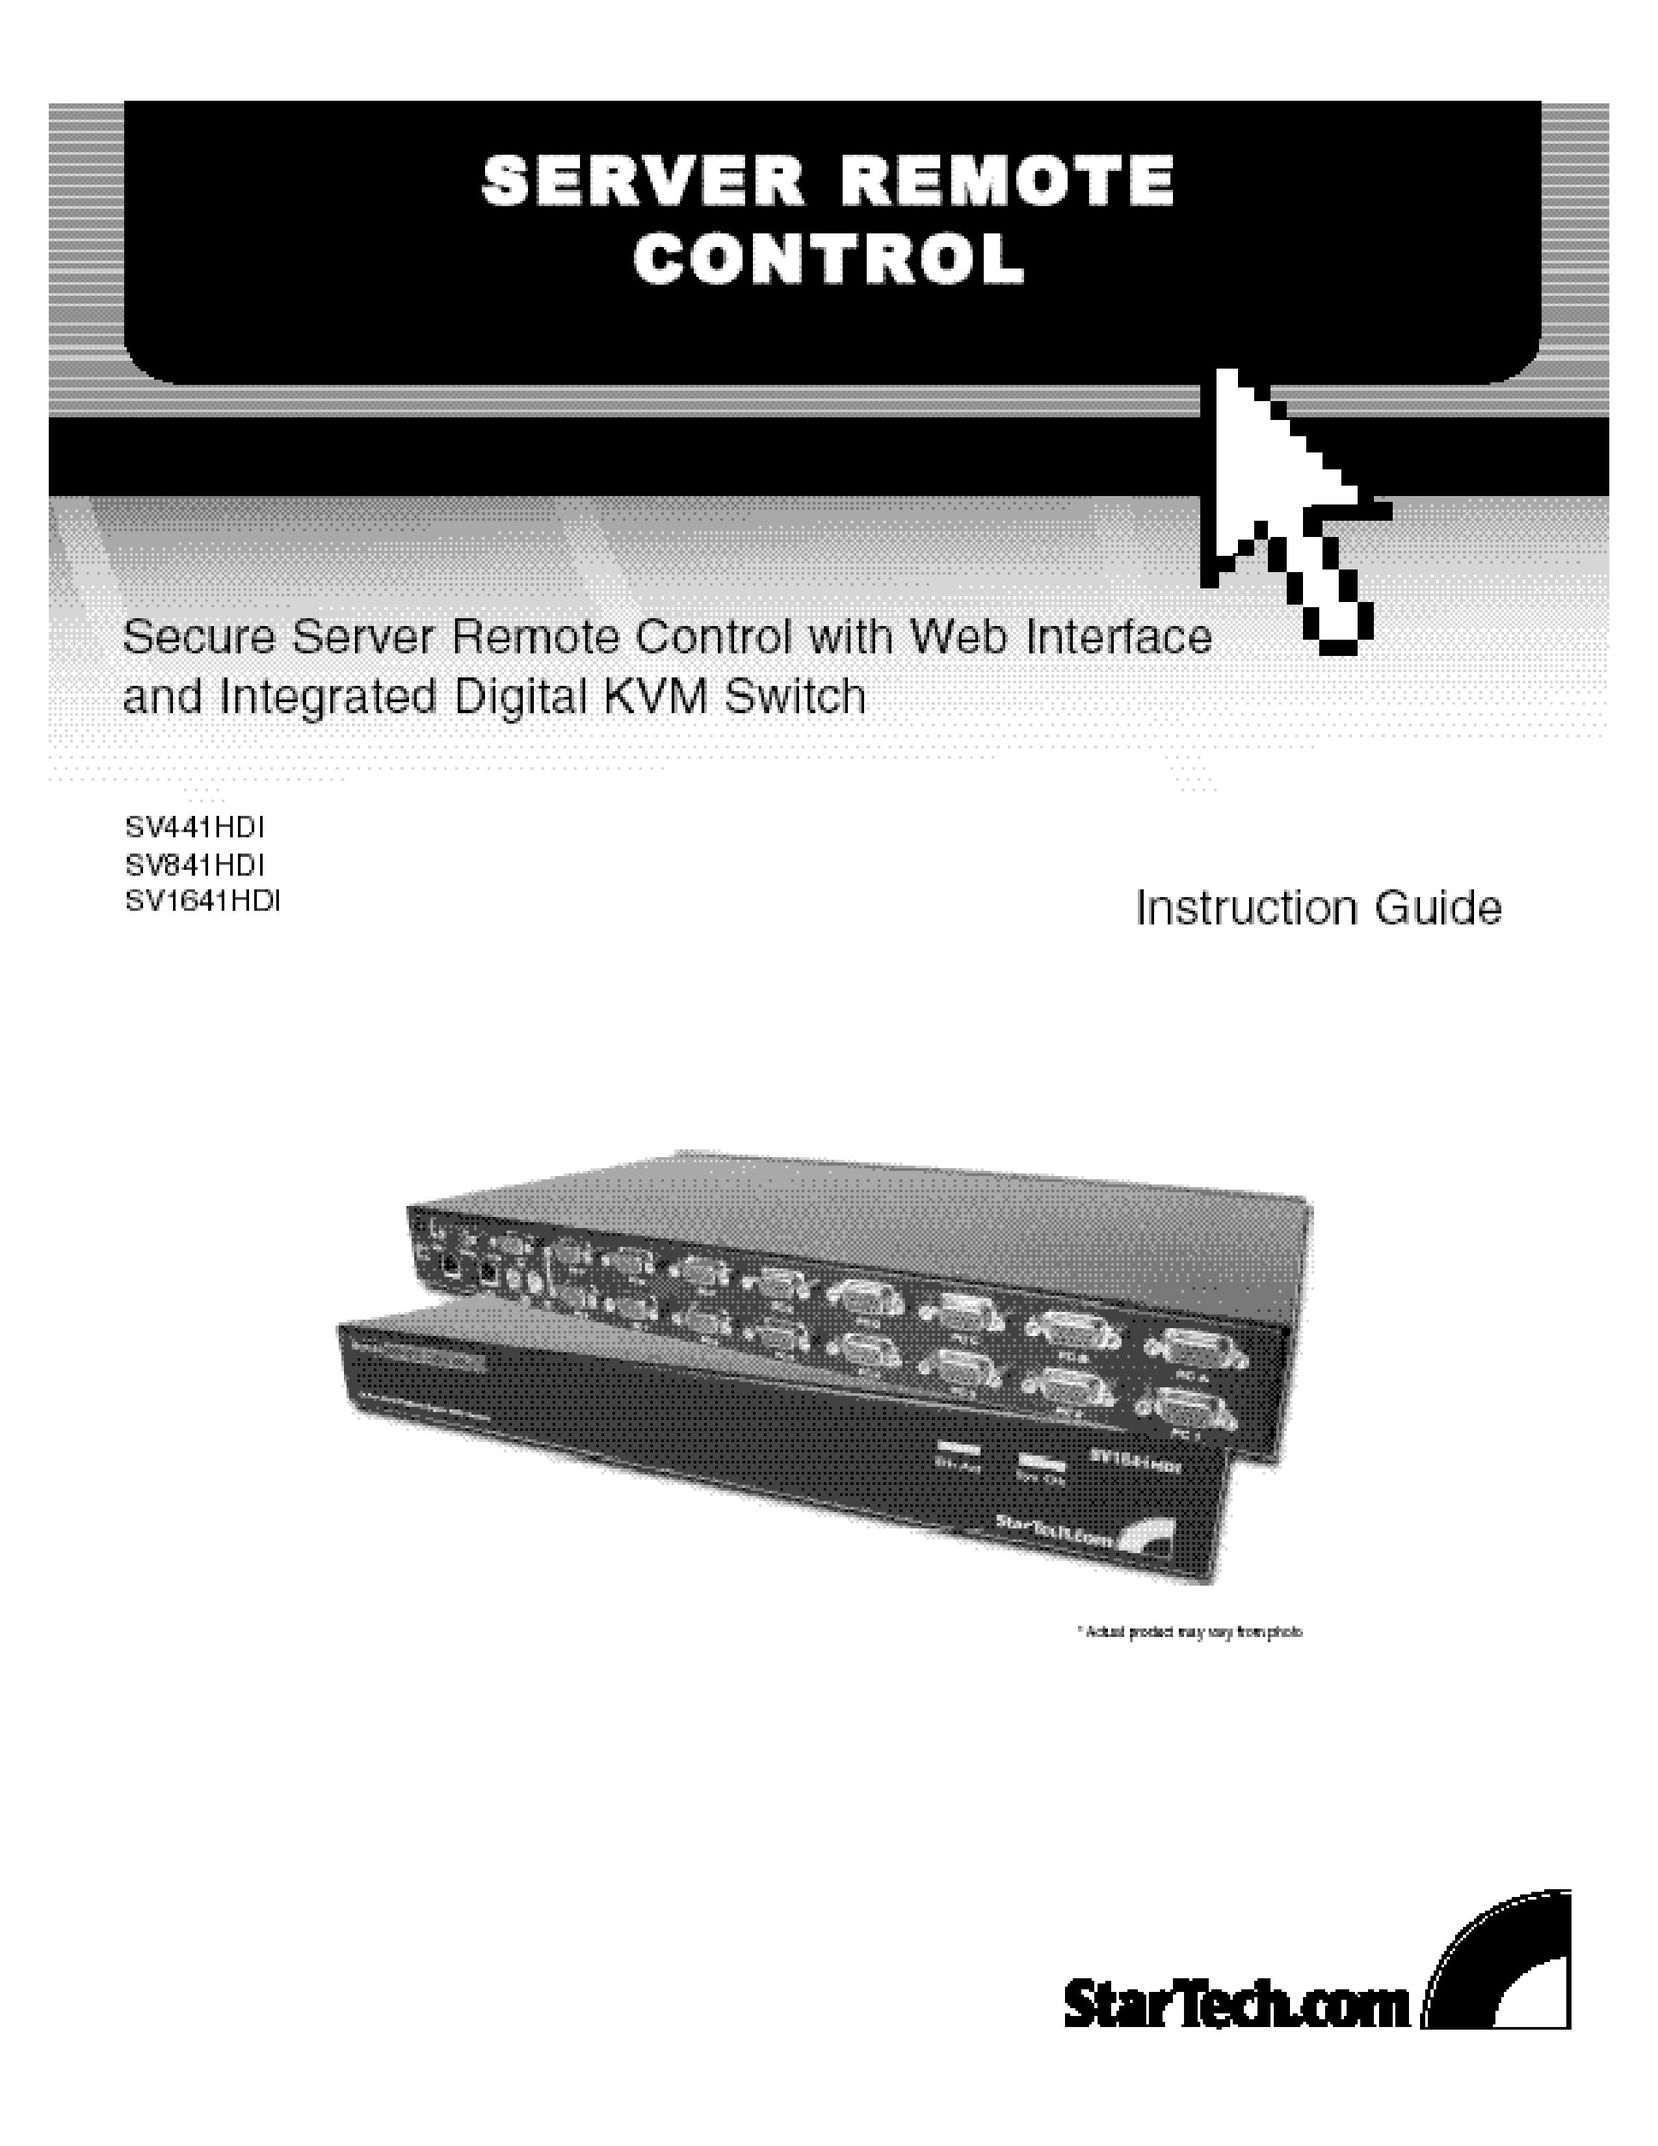 StarTech.com SV1641HDI Switch User Manual